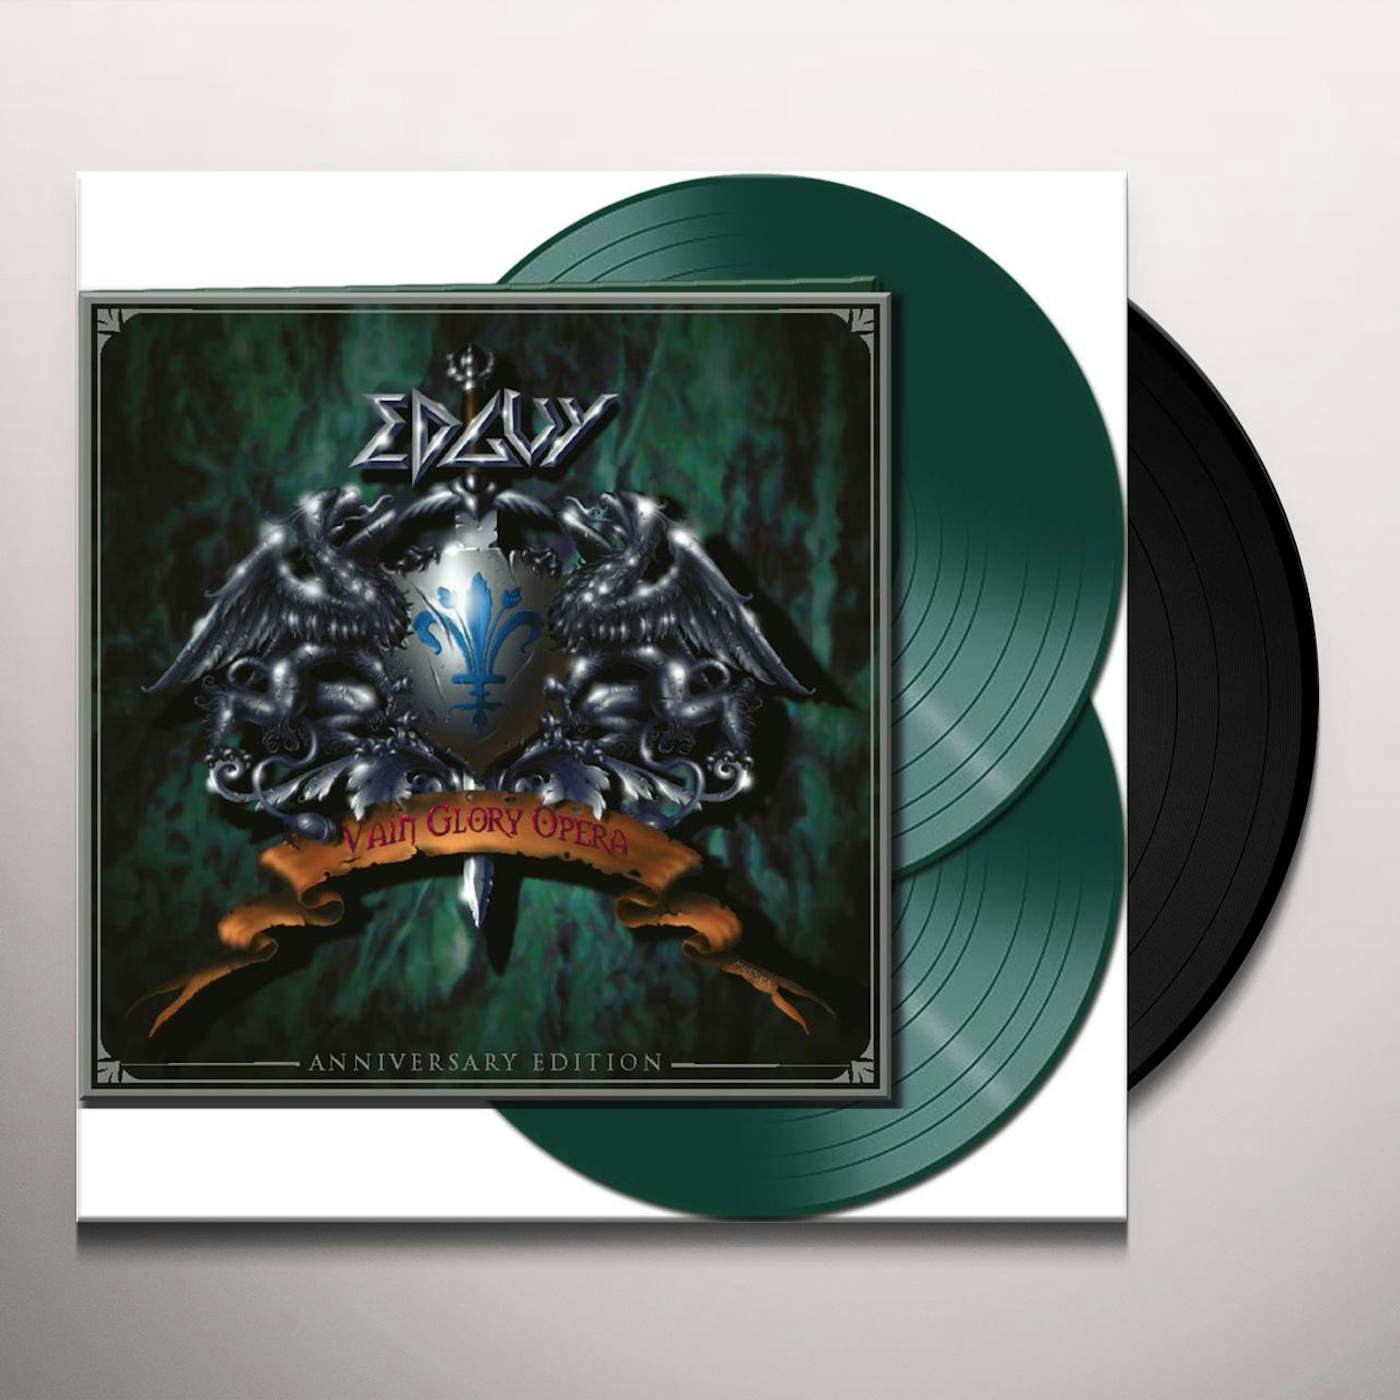 Edguy Vain Glory Opera (Anniversary Edition) Vinyl Record